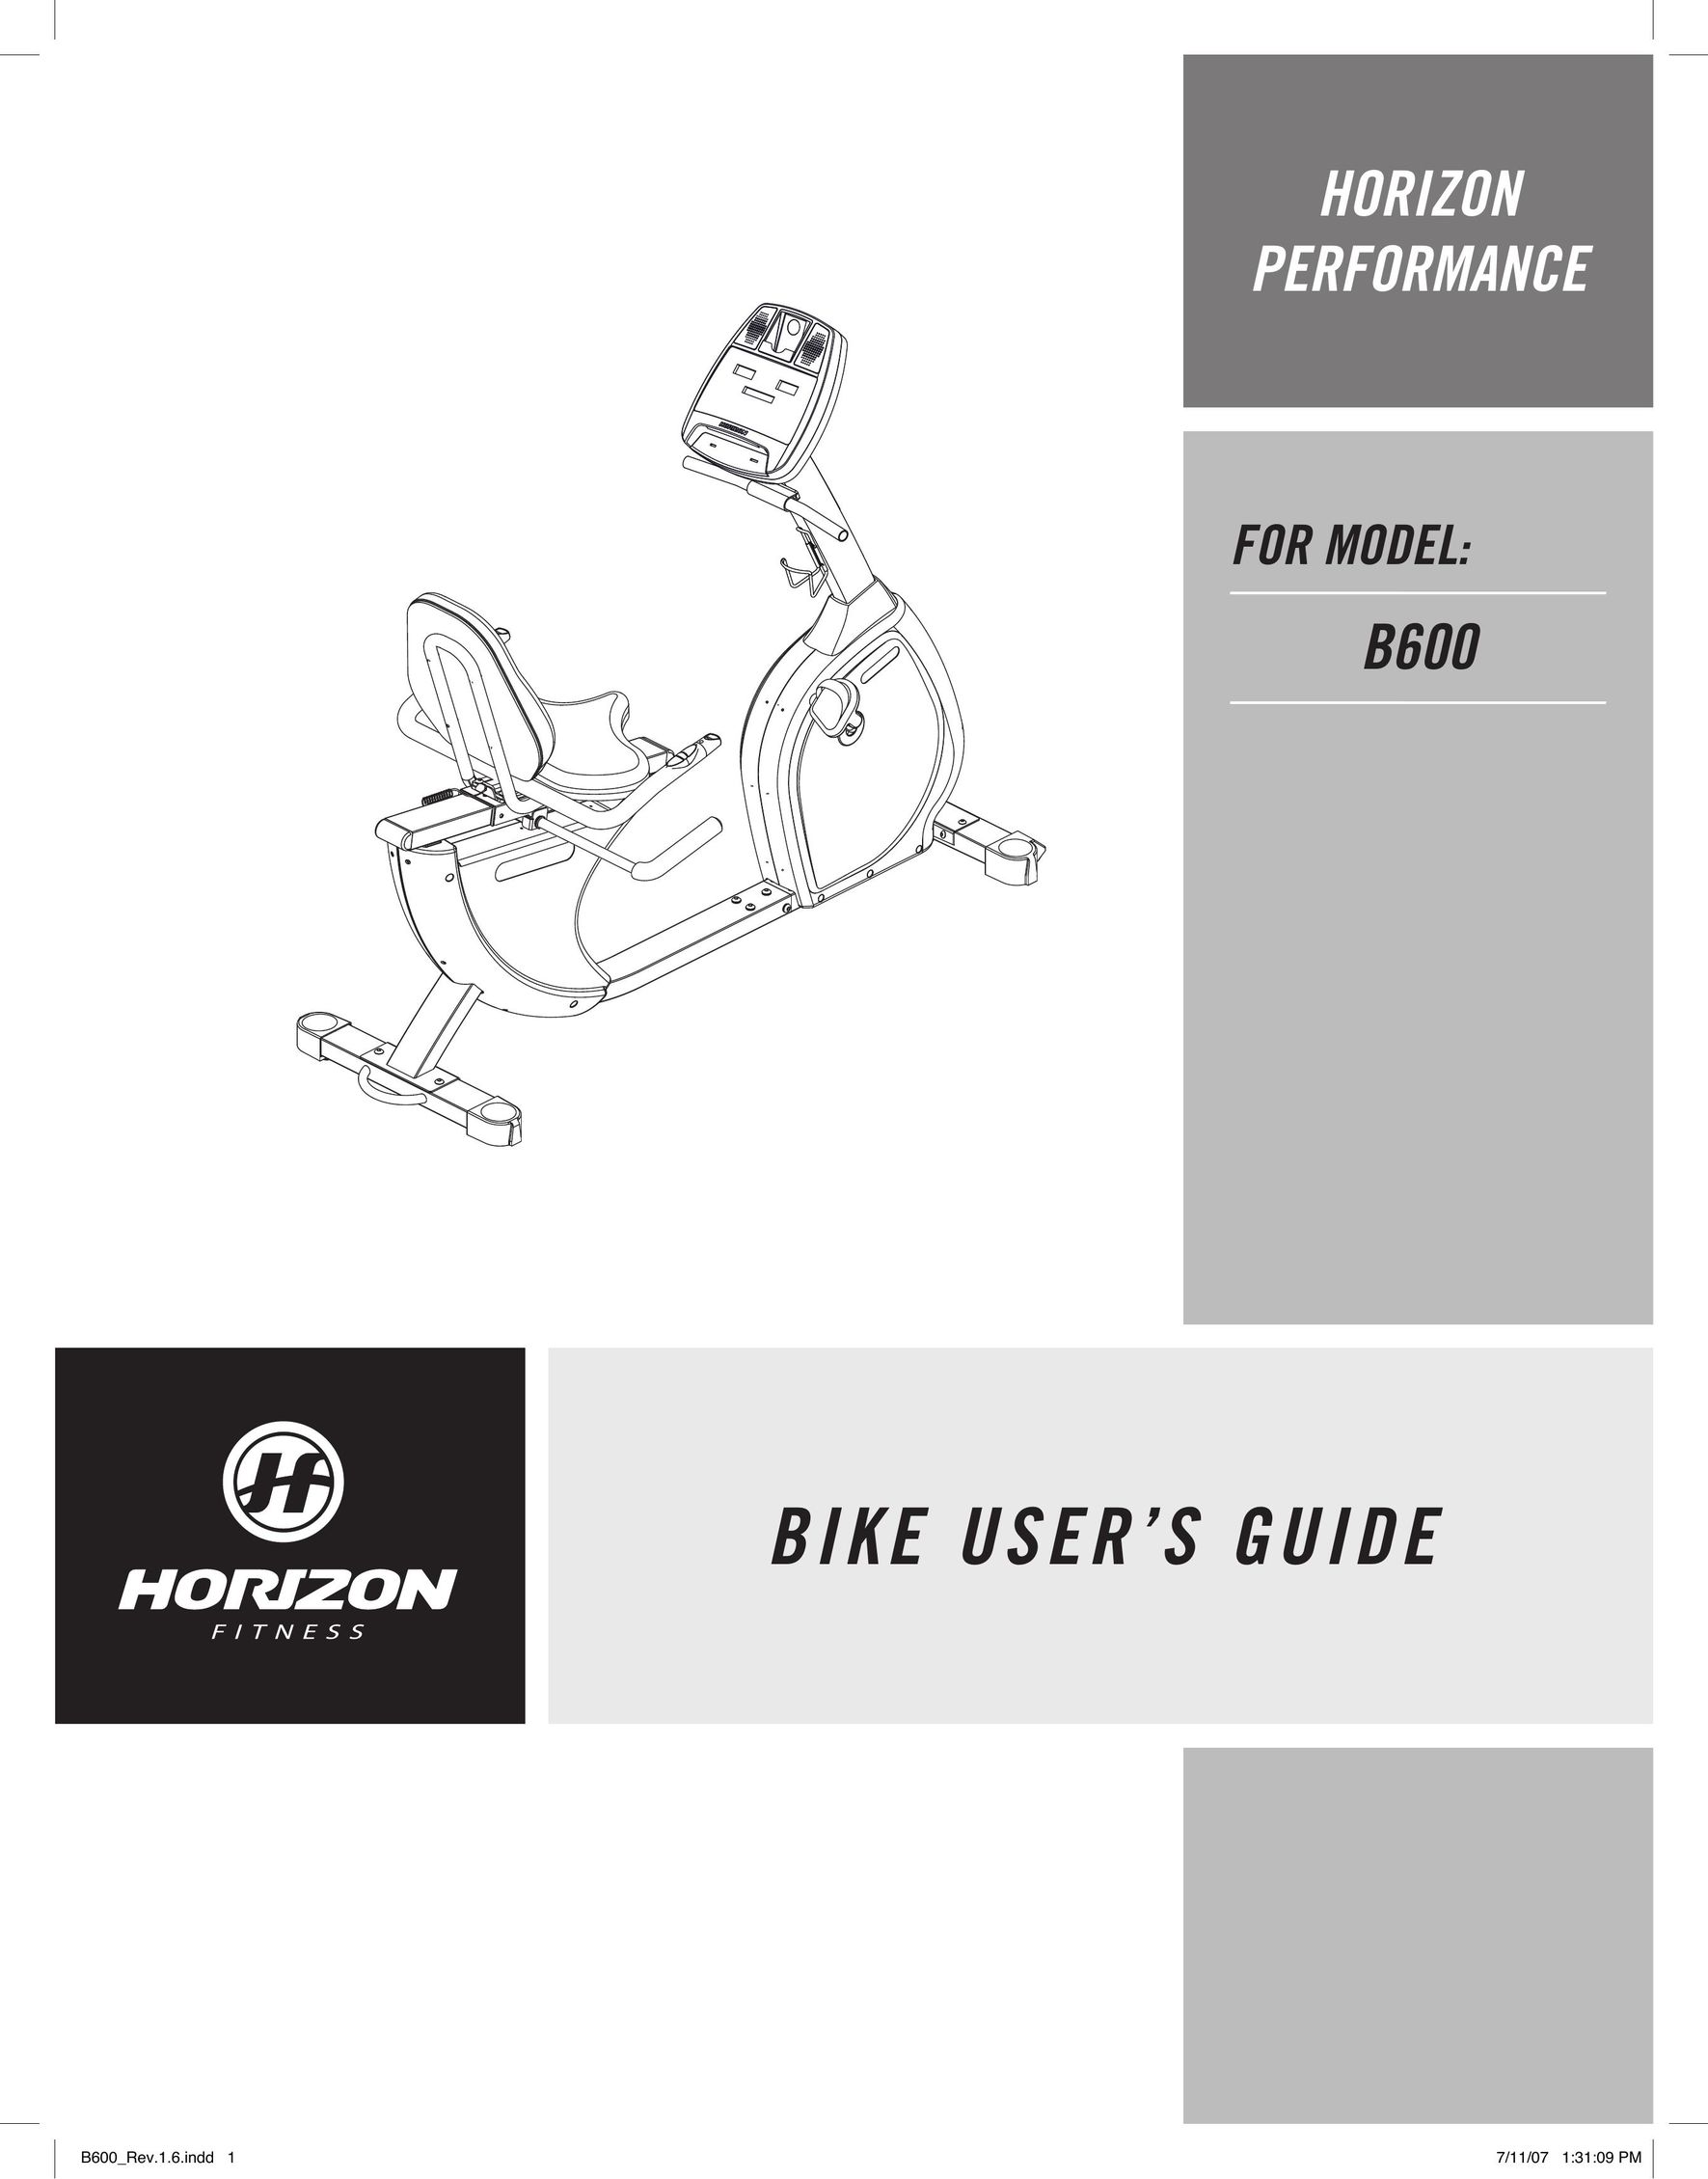 Horizon Fitness B600 Exercise Bike User Manual (Page 1)